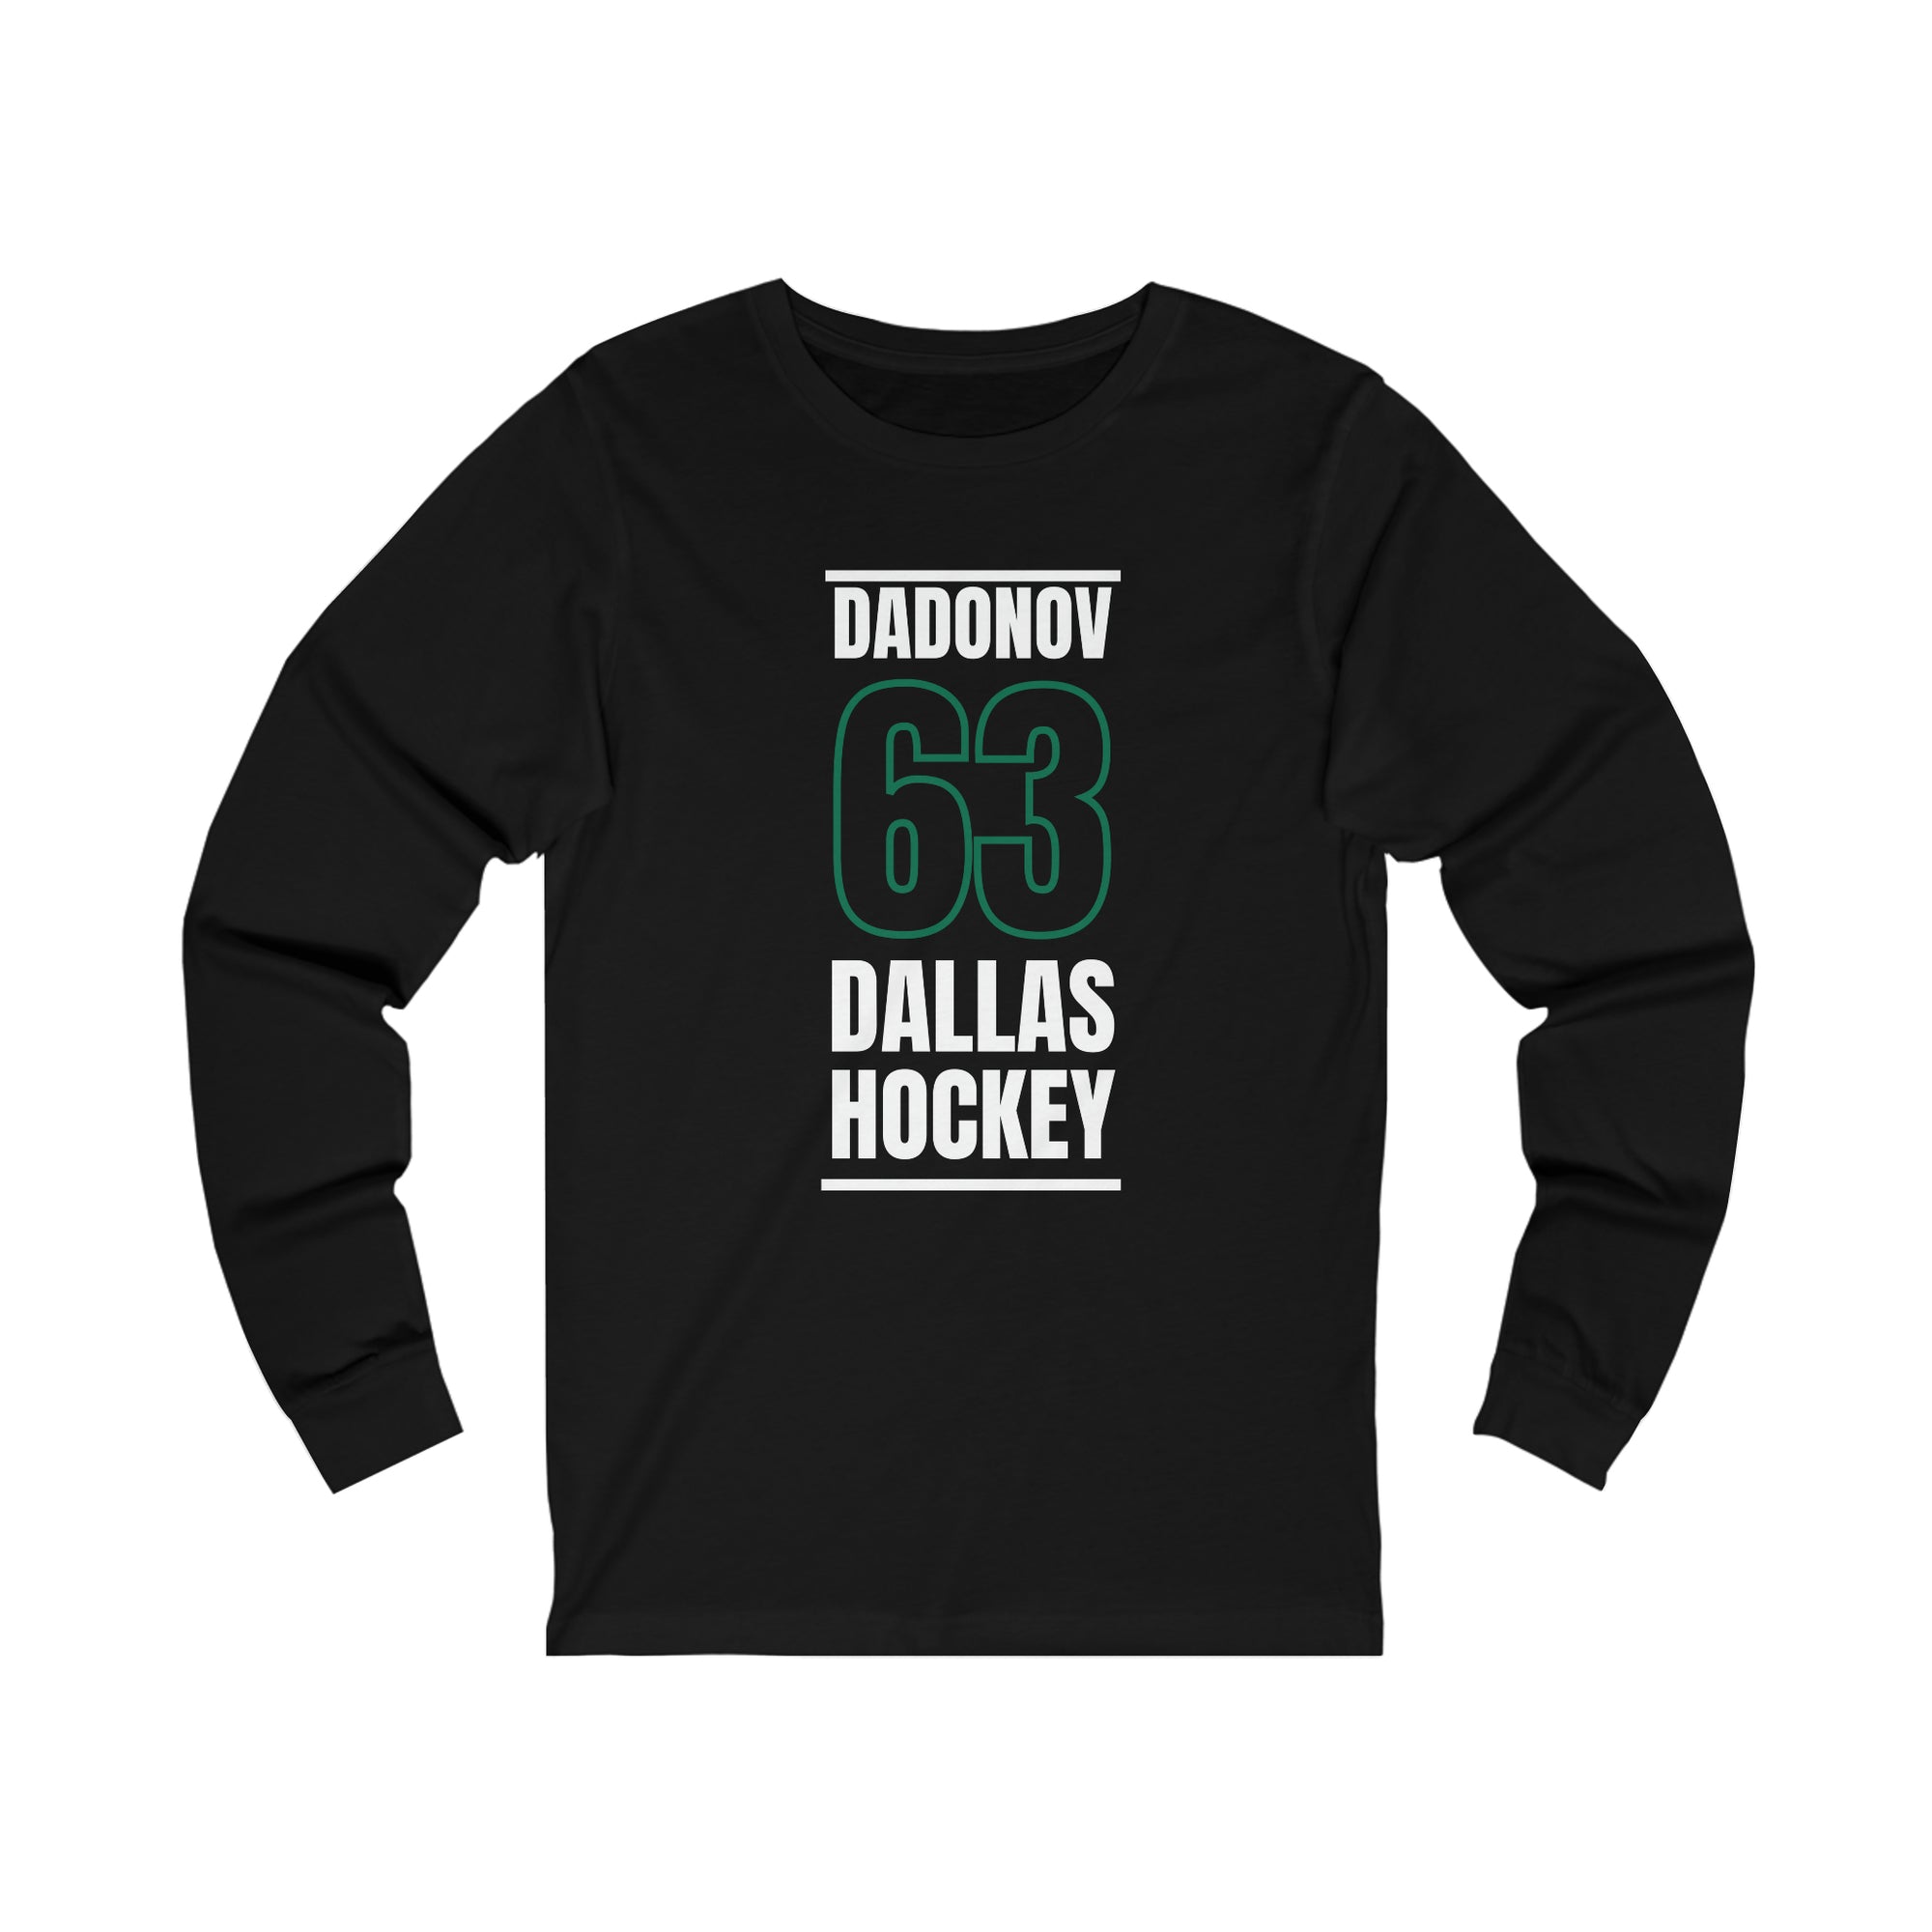 Dadonov 63 Dallas Hockey Black Vertical Design Unisex Jersey Long Sleeve Shirt